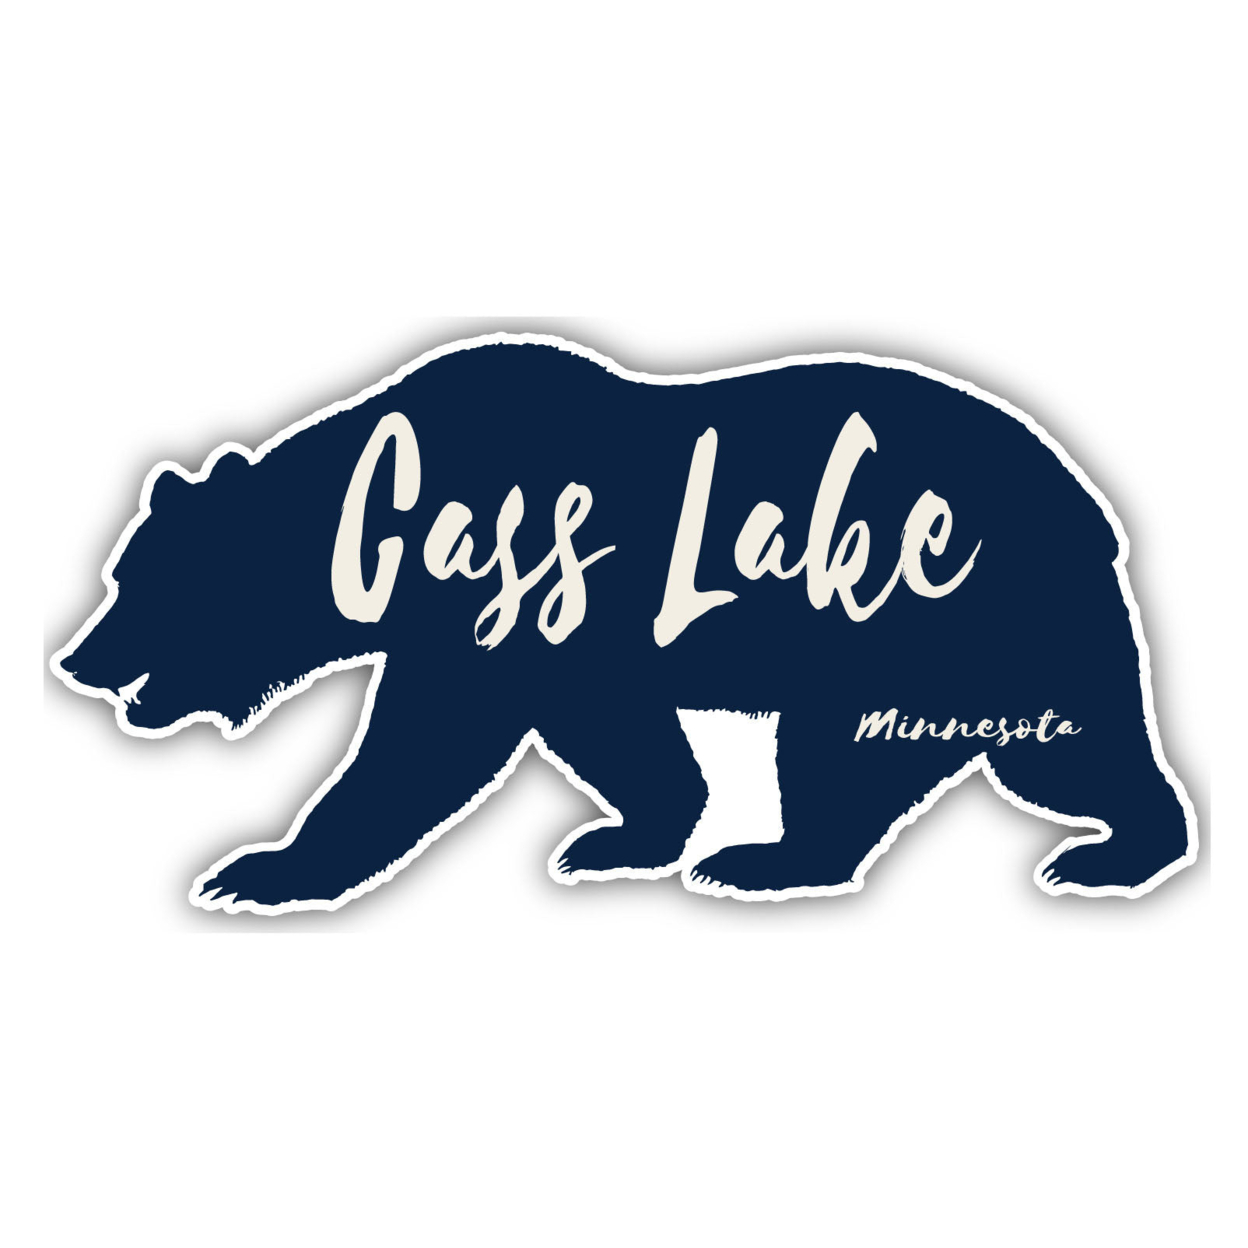 Cass Lake Minnesota Souvenir Decorative Stickers (Choose Theme And Size) - Single Unit, 12-Inch, Camp Life